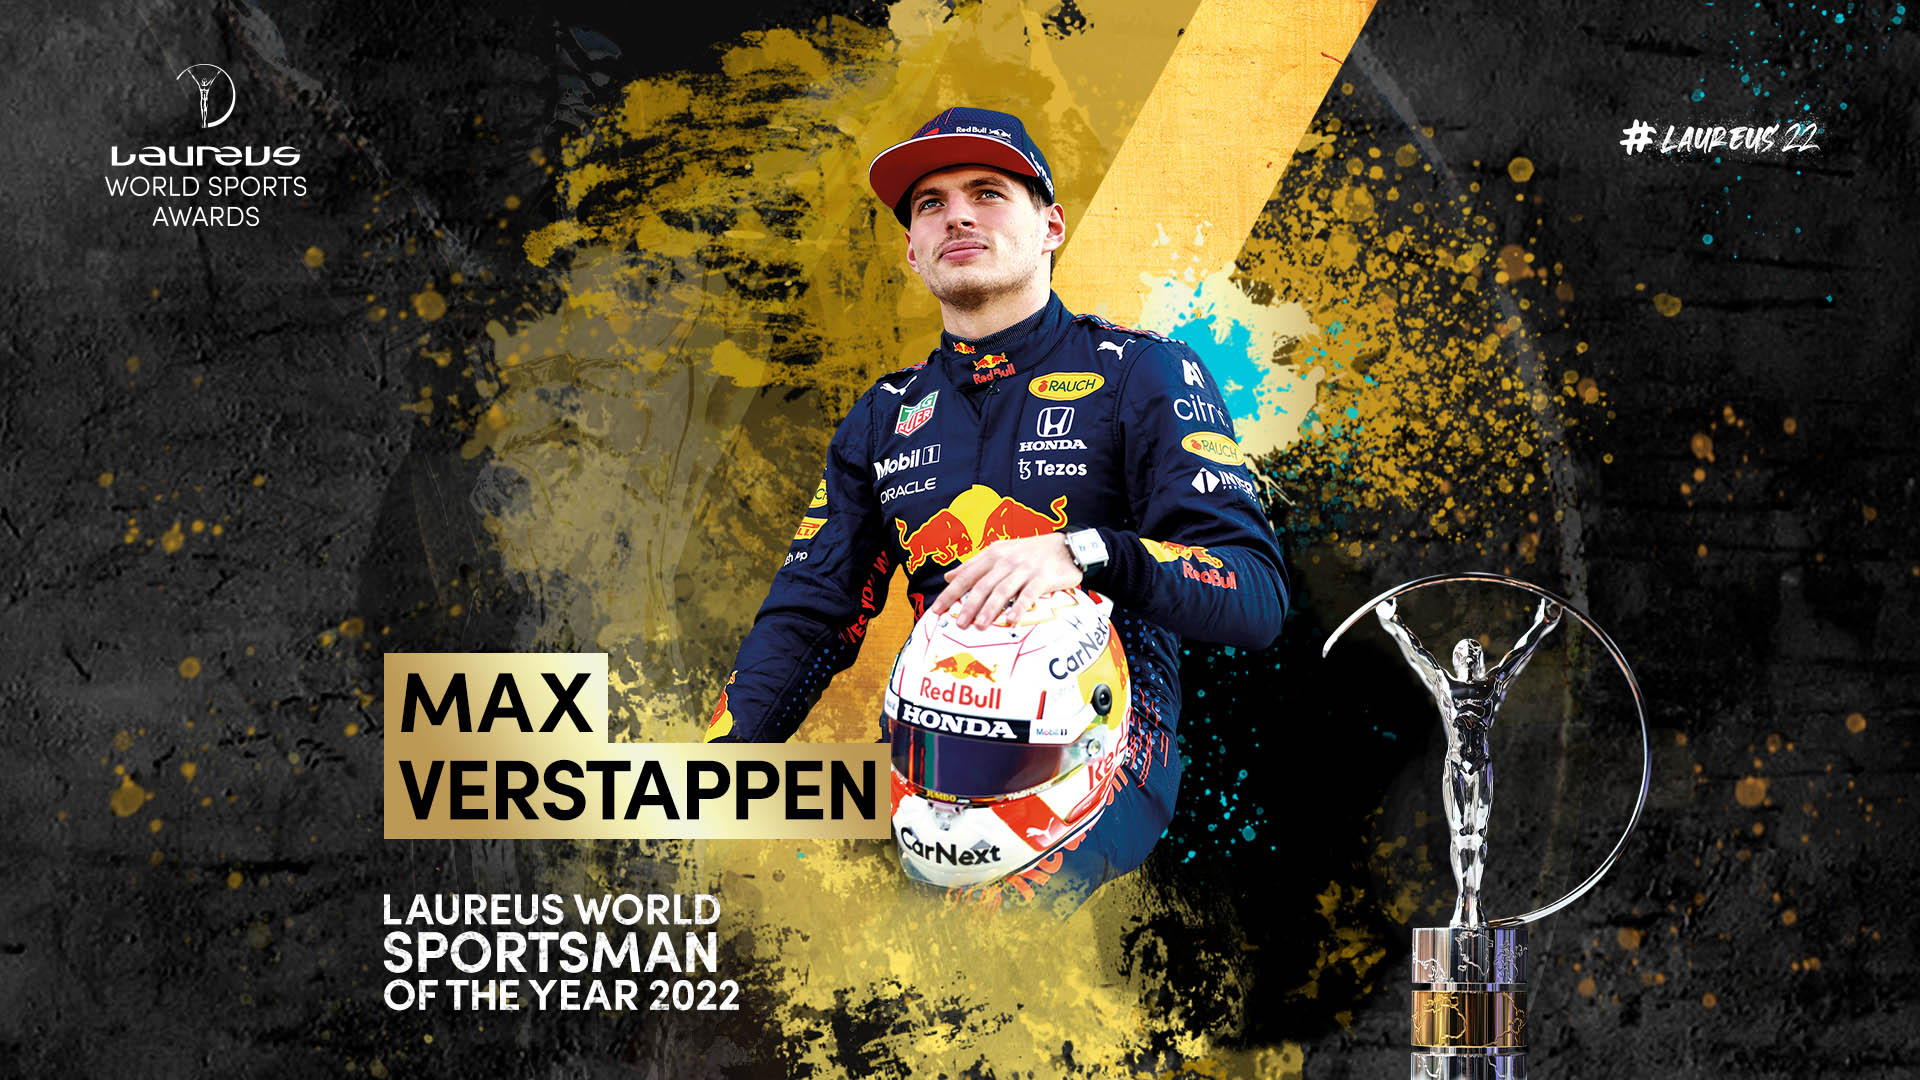 Laureus World Sportsman of the Year 2022 - Max Verstappen 